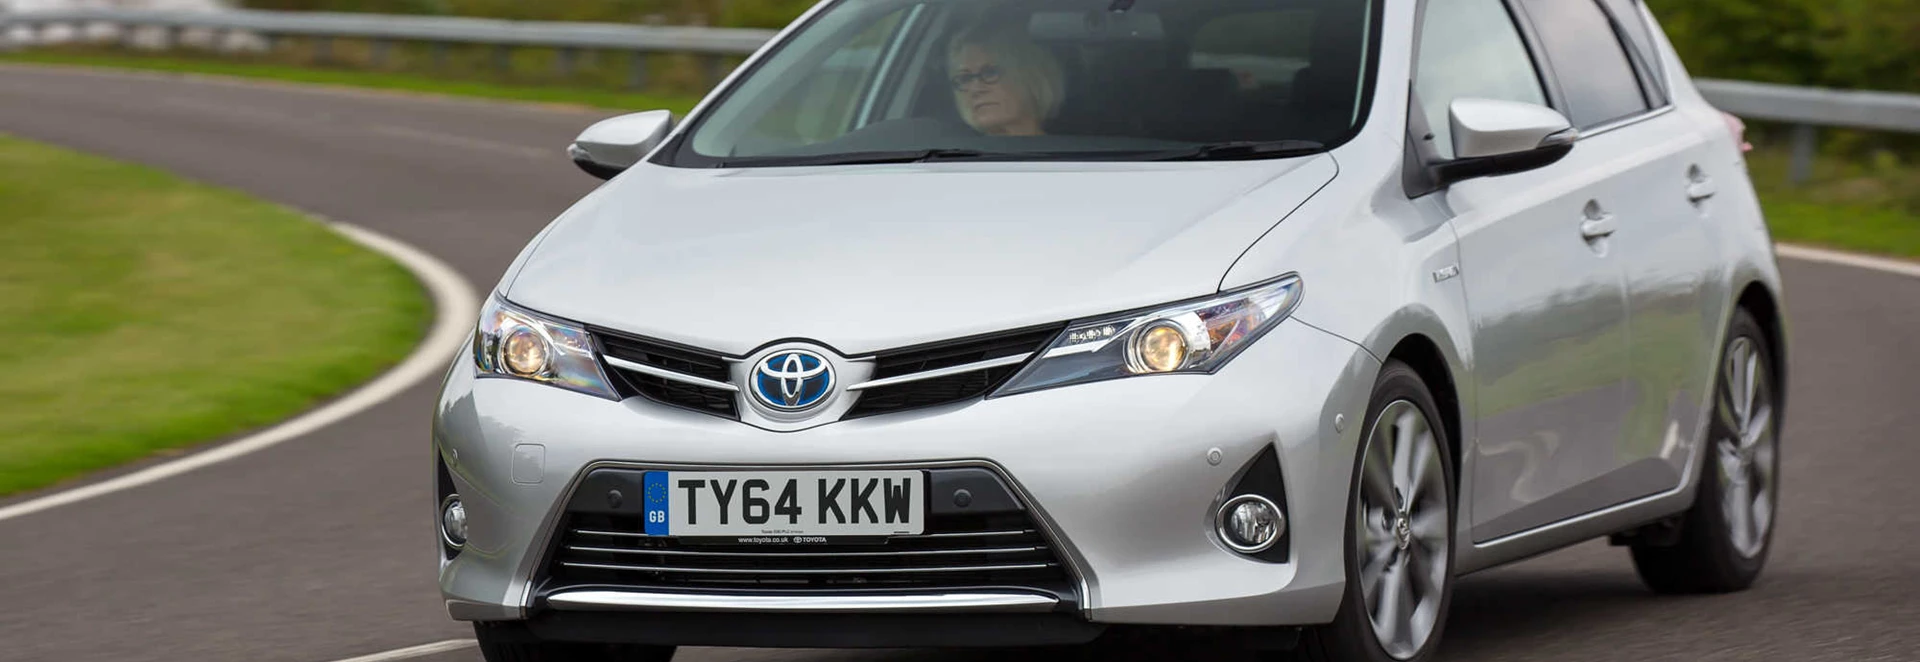 Toyota Auris hatchback review 